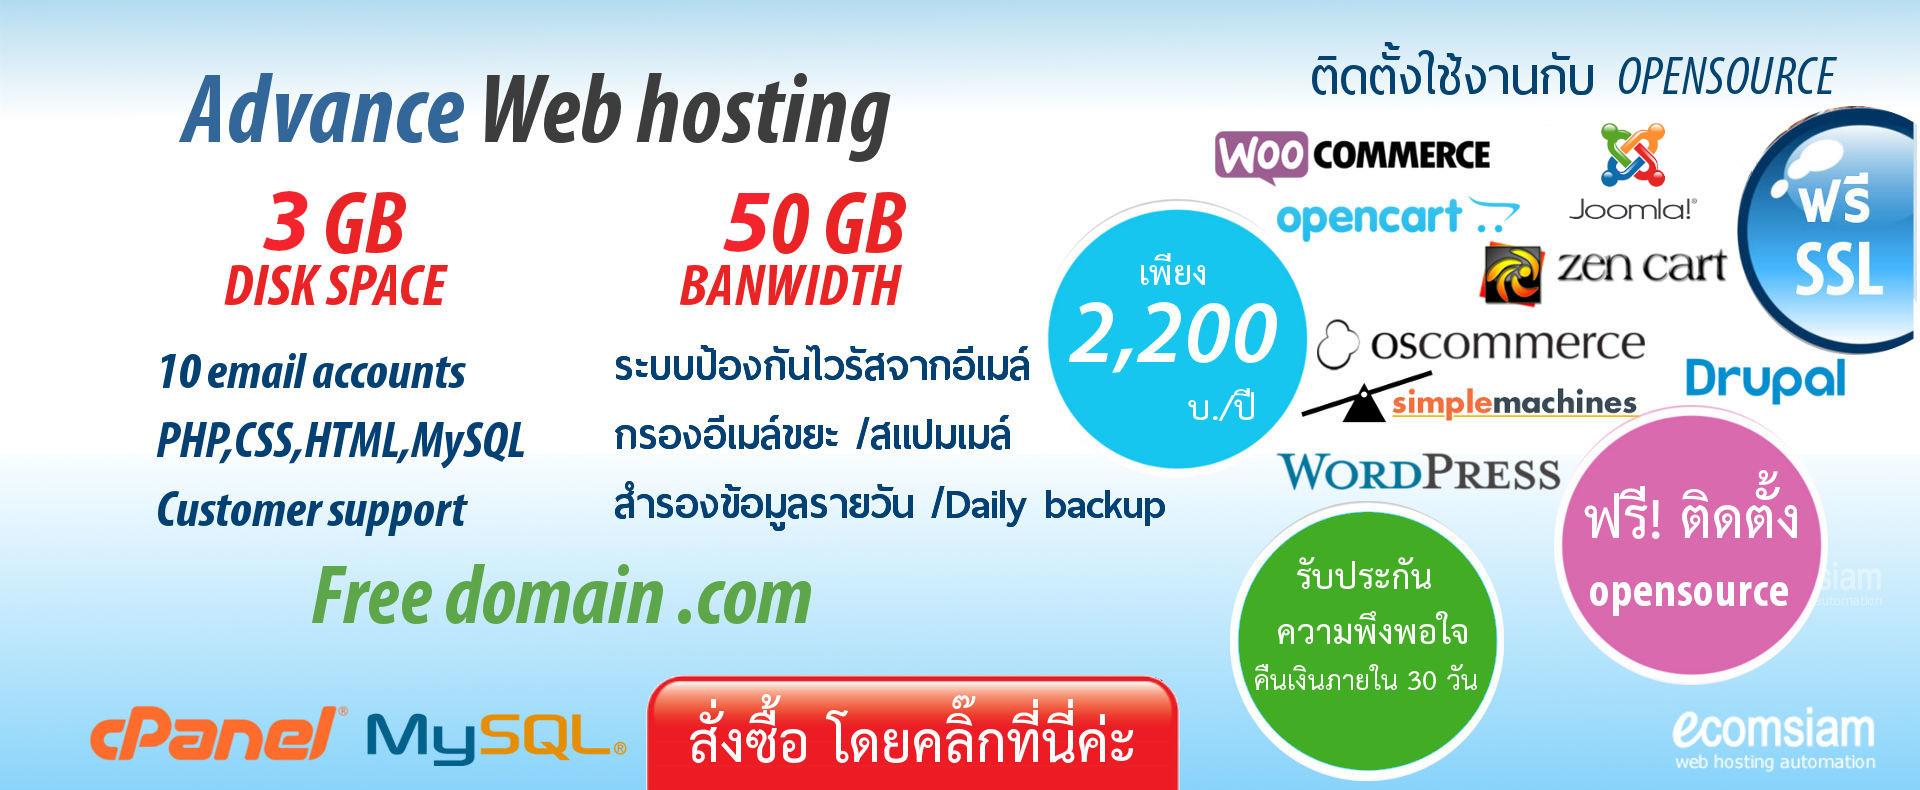 Advance hosting thai ไทย เพียง 2200 บาทต่อปี ฟรีโดเมนเนม ฟรี SSL ใช้งาน php,MySQL database ฟรีติดตั้ง opensource wordpress joomla zencart oscommerce ... 